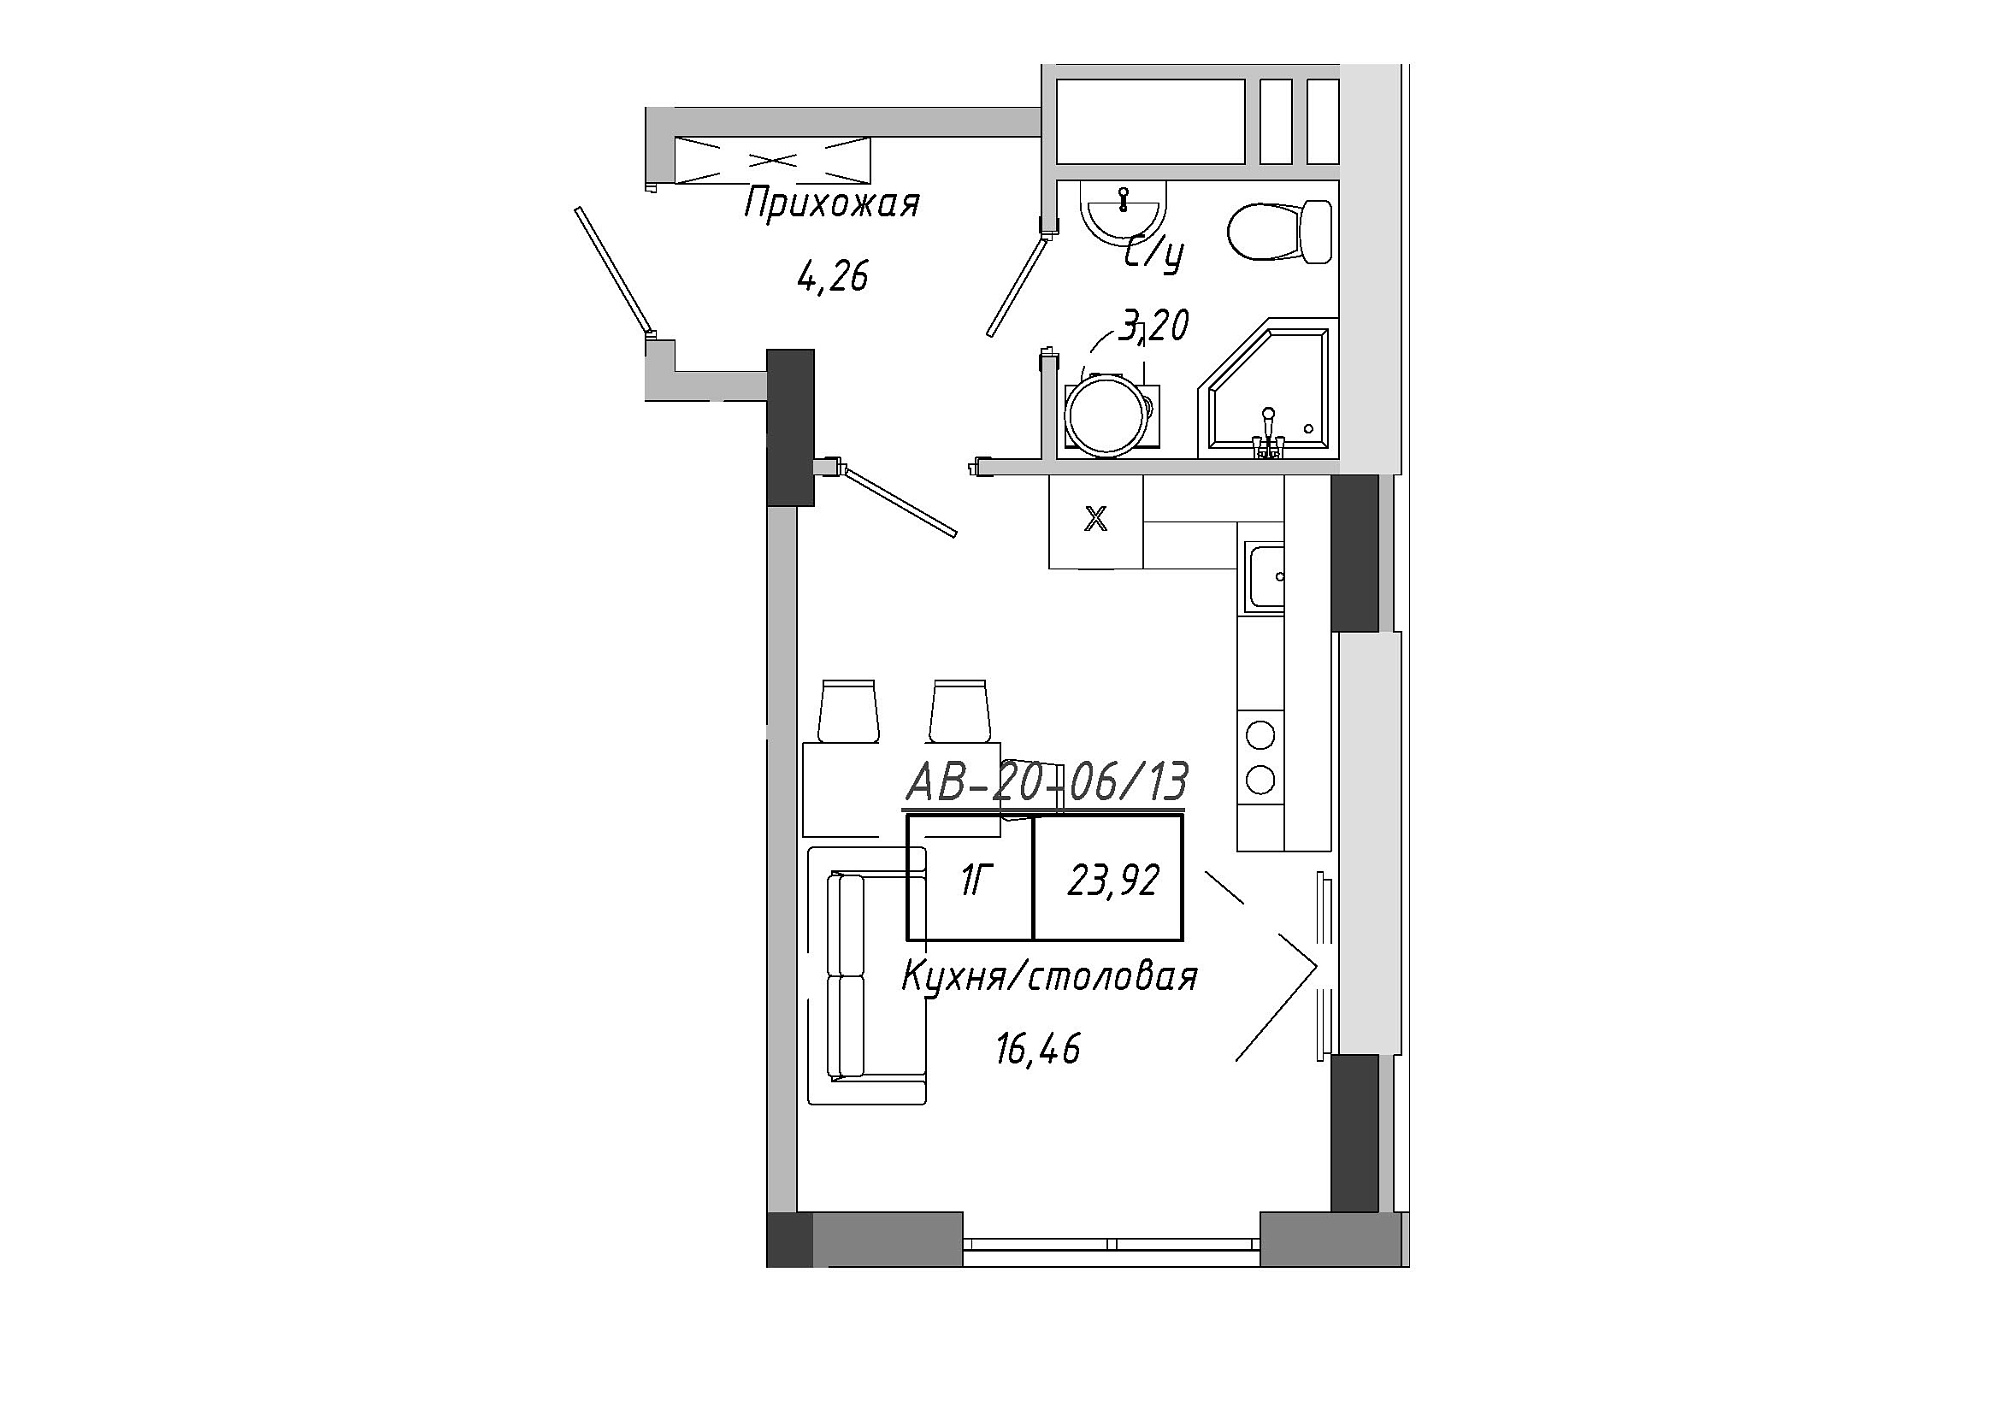 Planning Smart flats area 23.4m2, AB-20-06/00013.